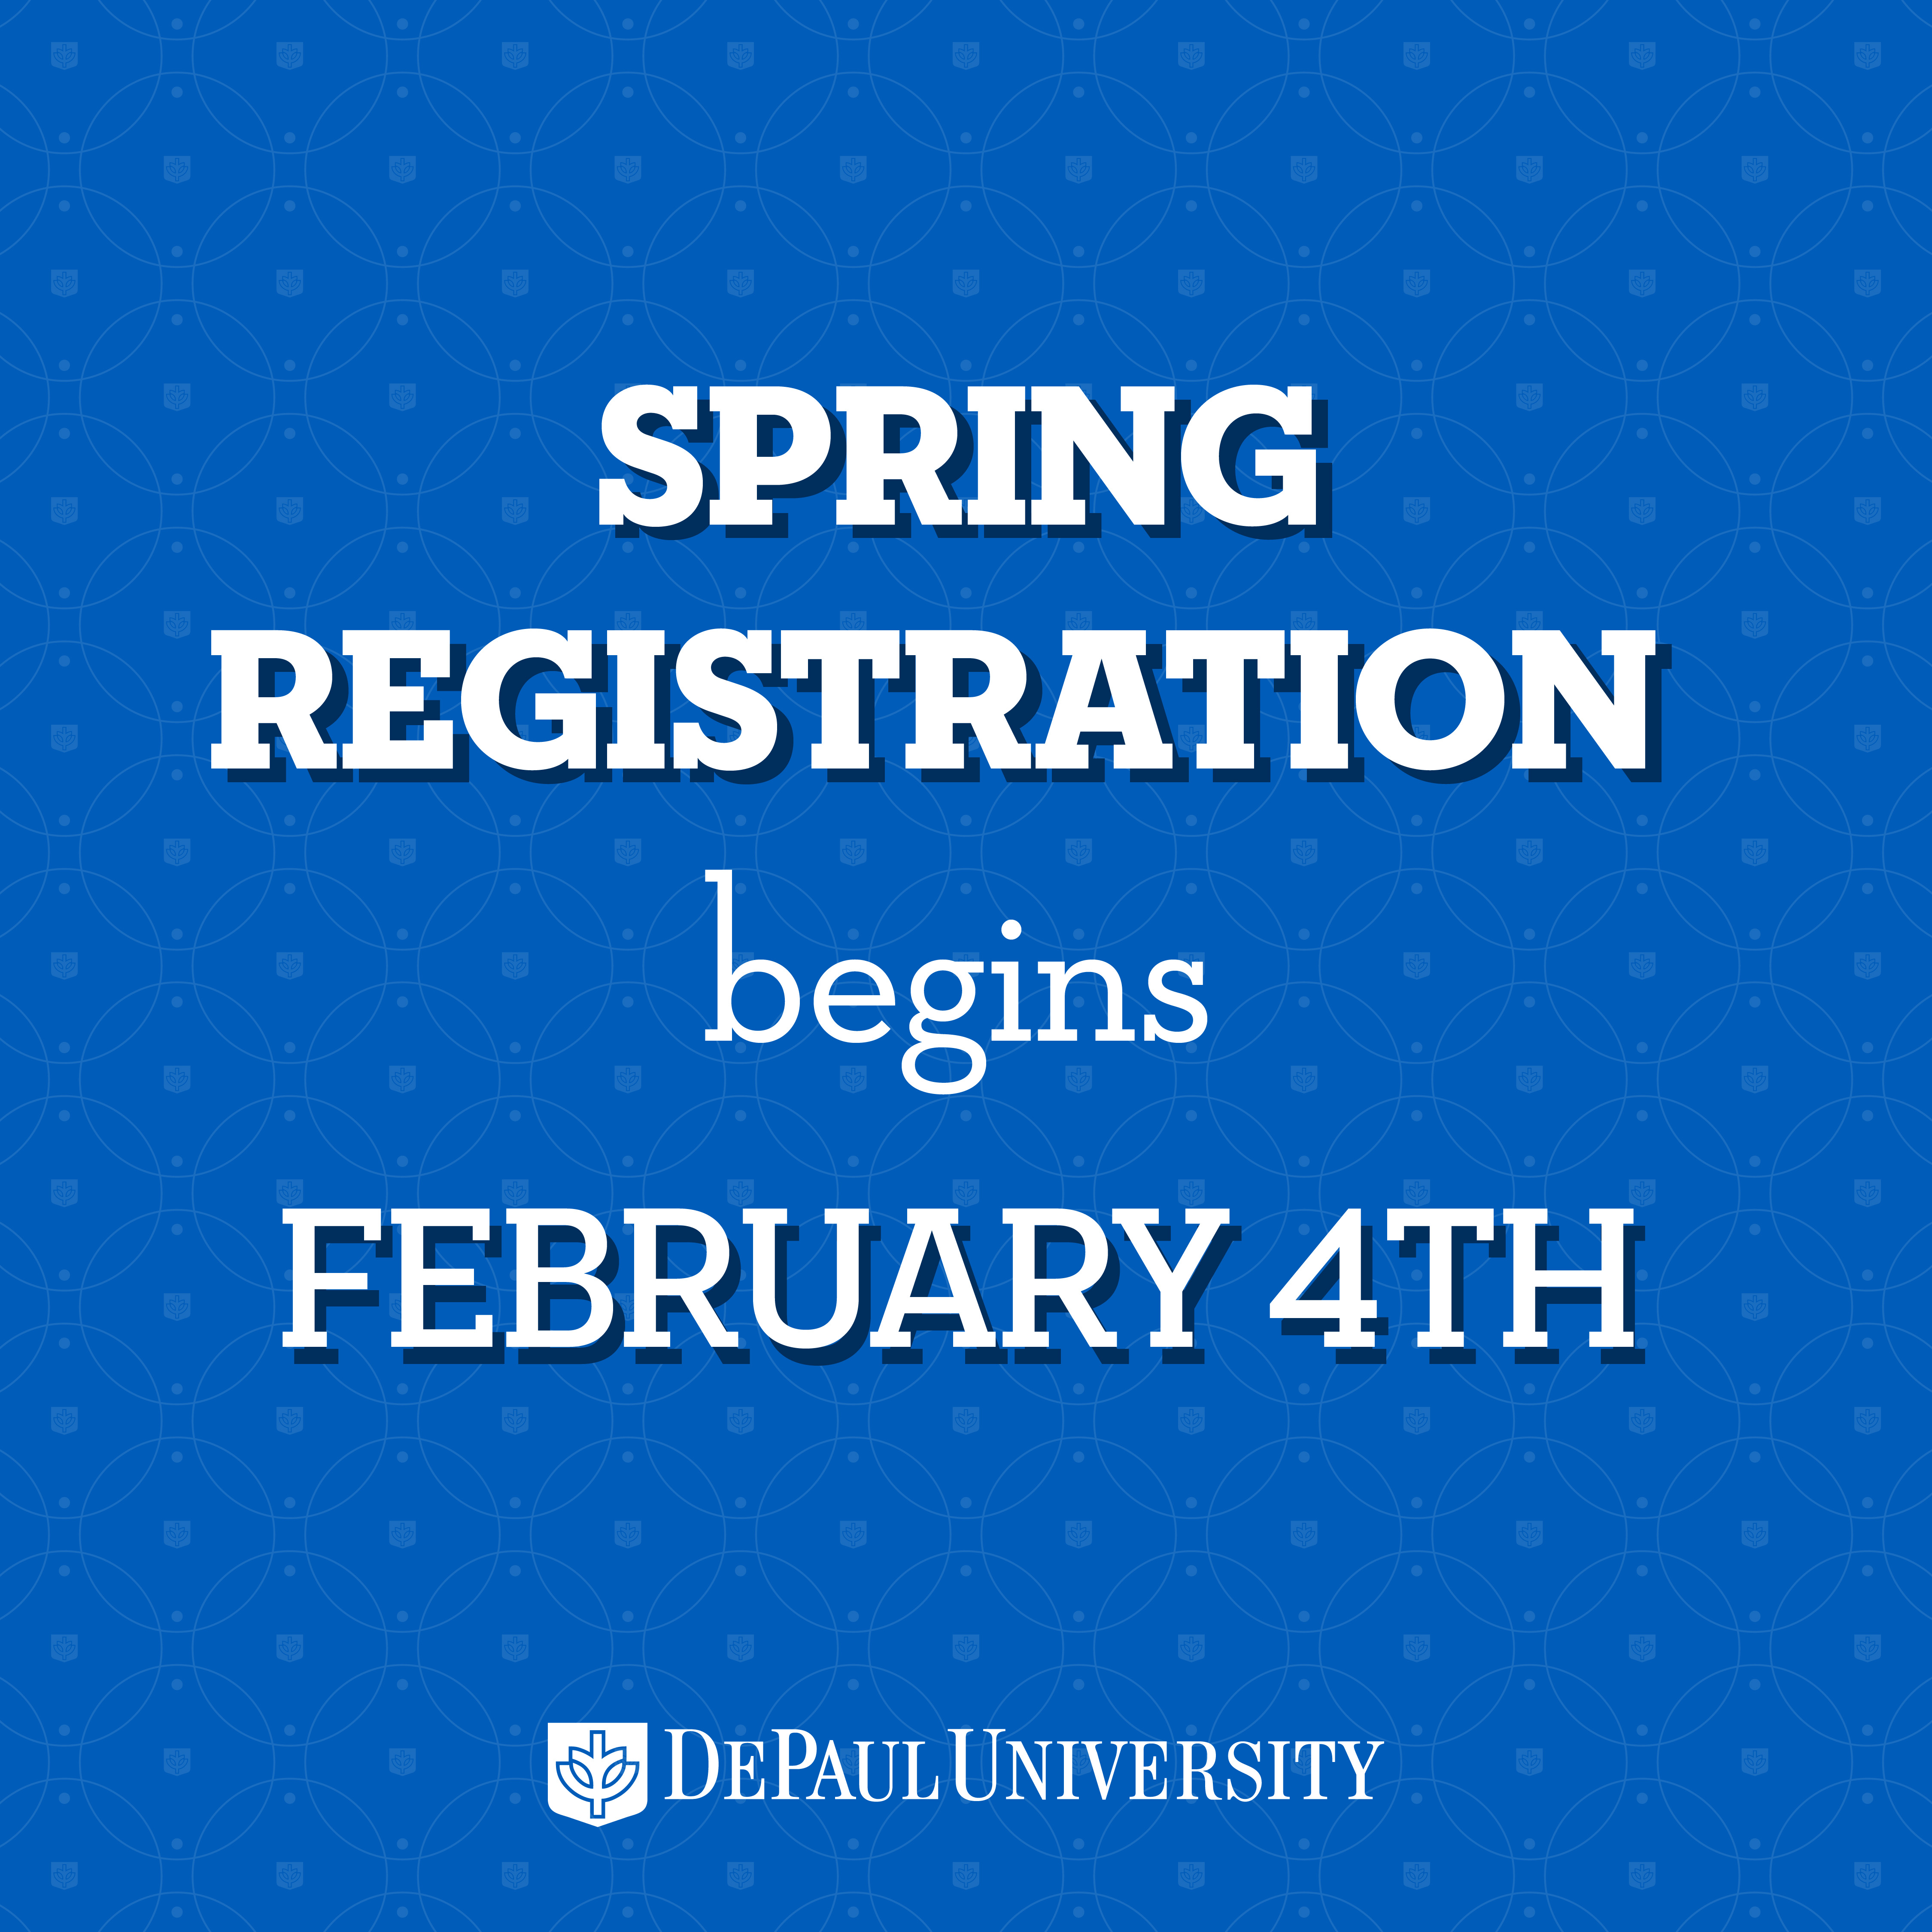 Spring Quarter Registration